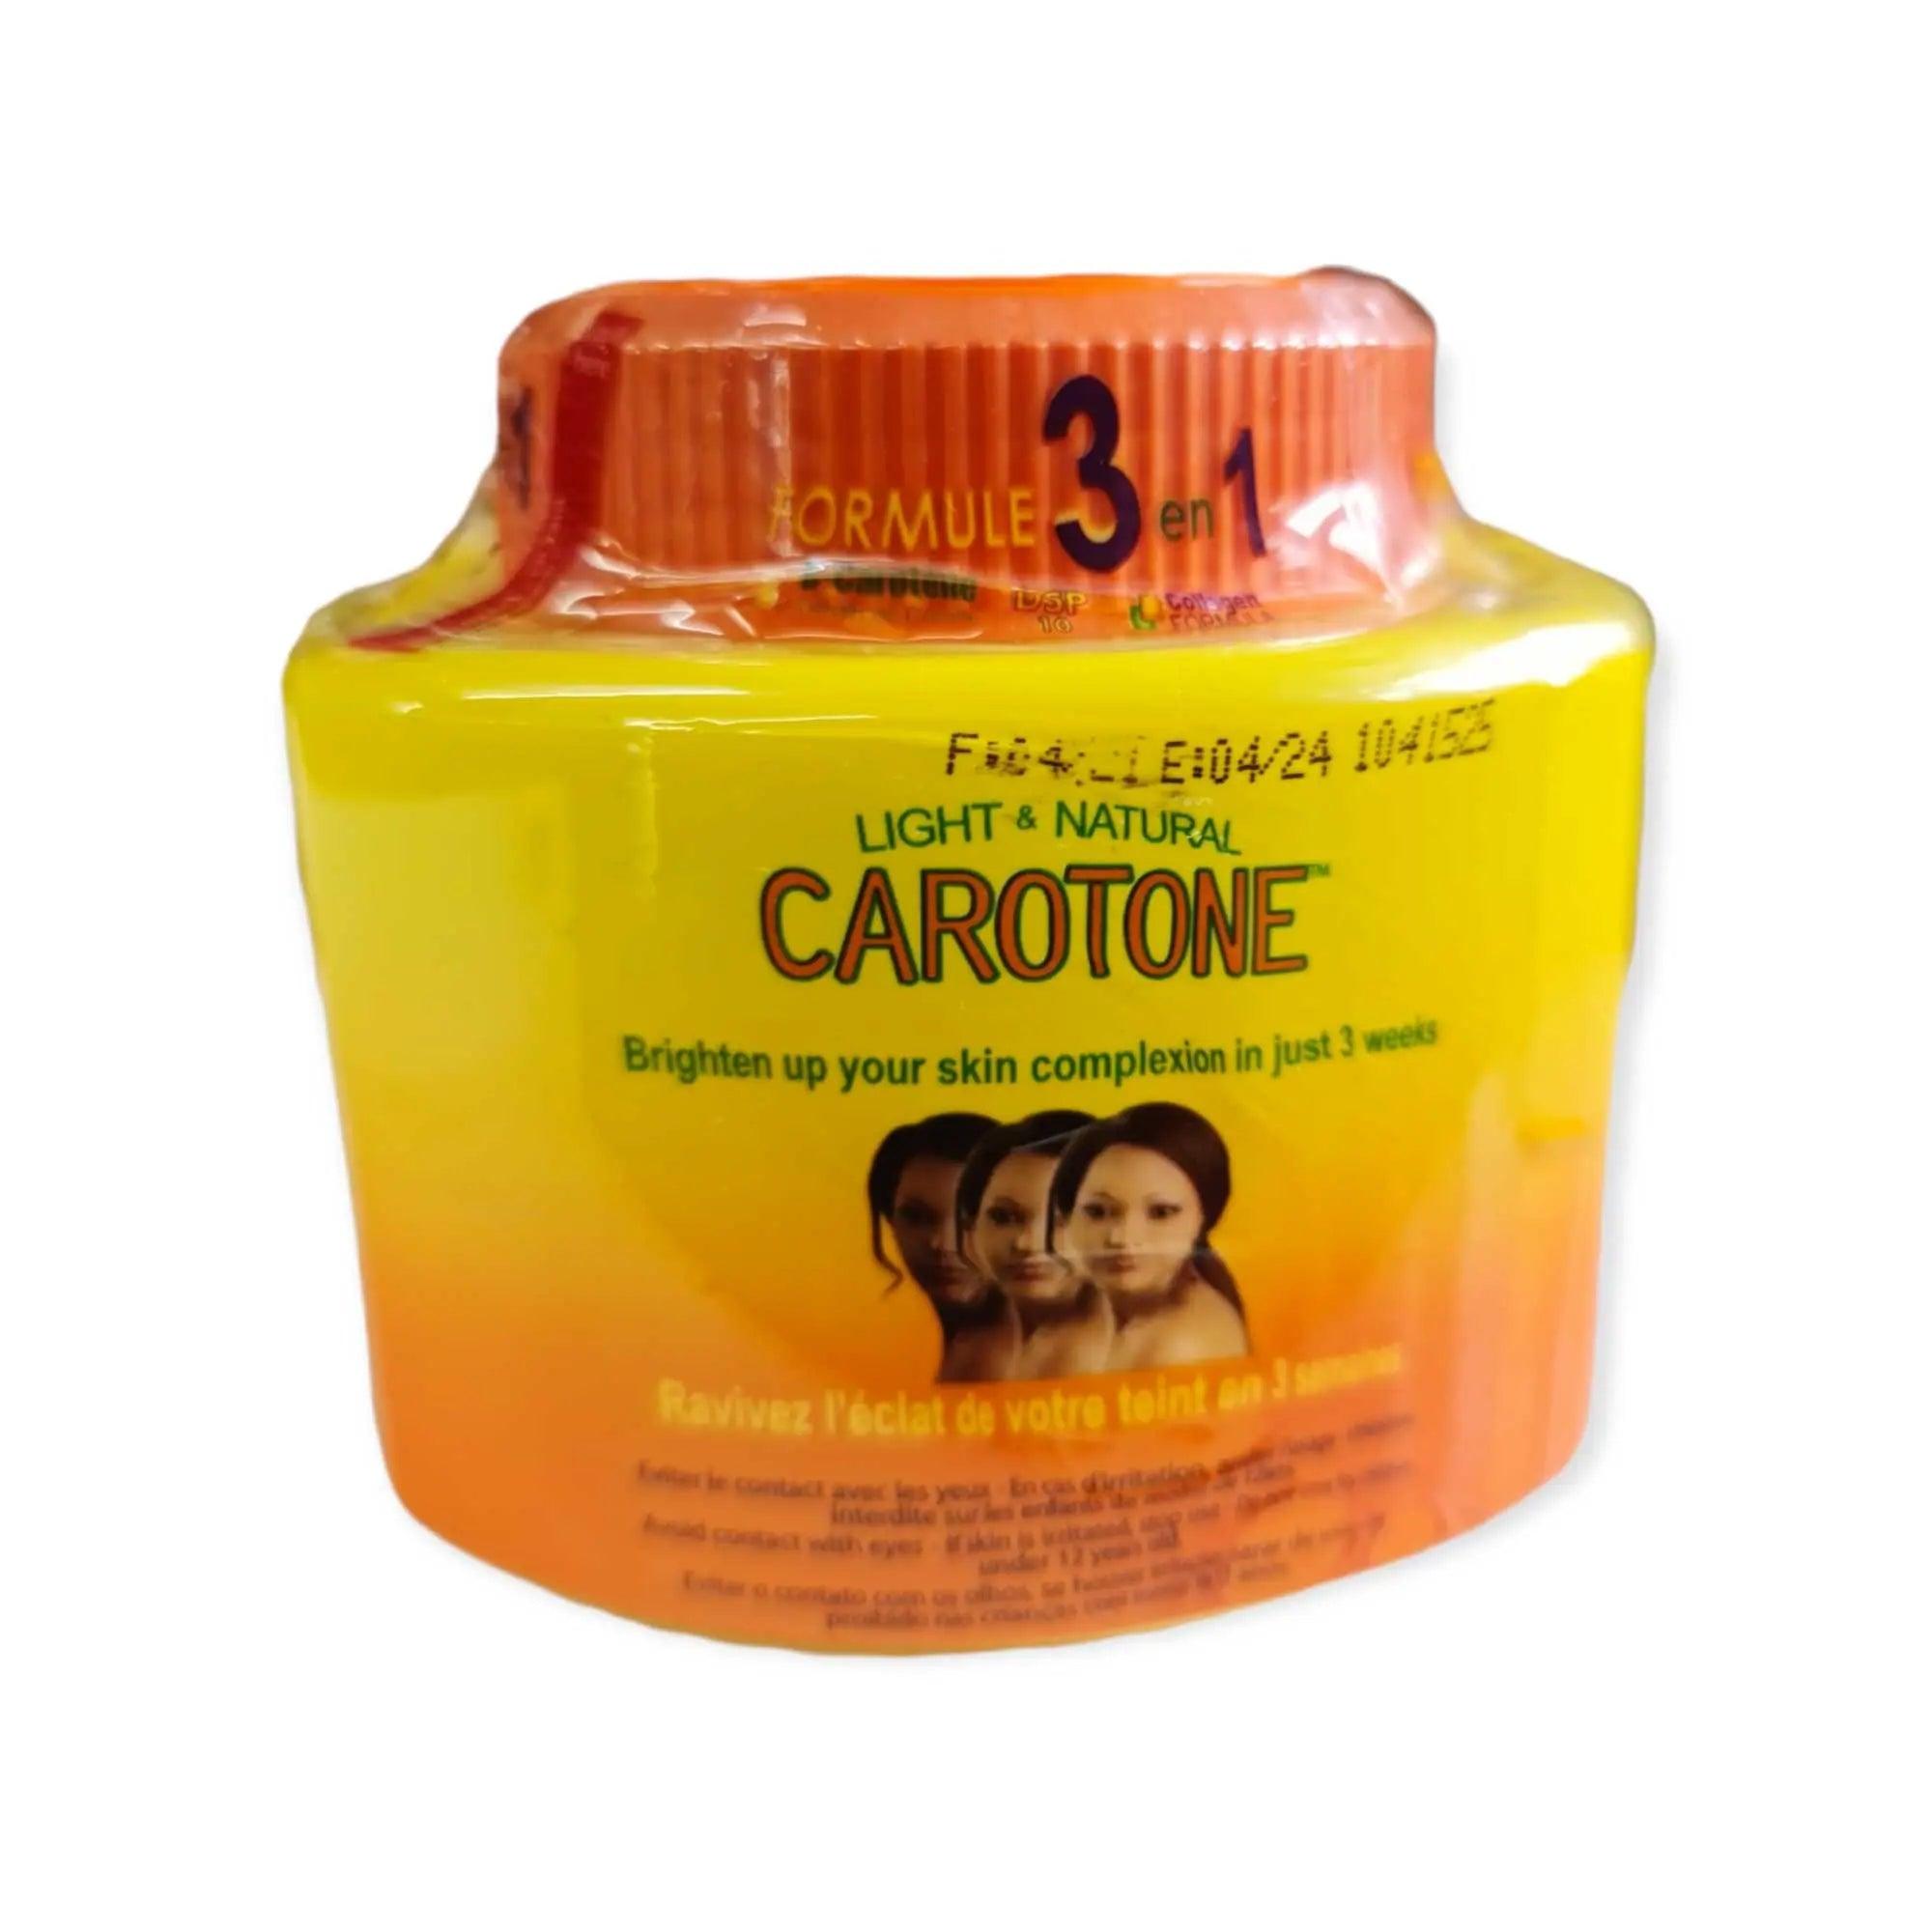 Light & Natural CaroTone Brightening Cream 330g - Honesty Sales U.K